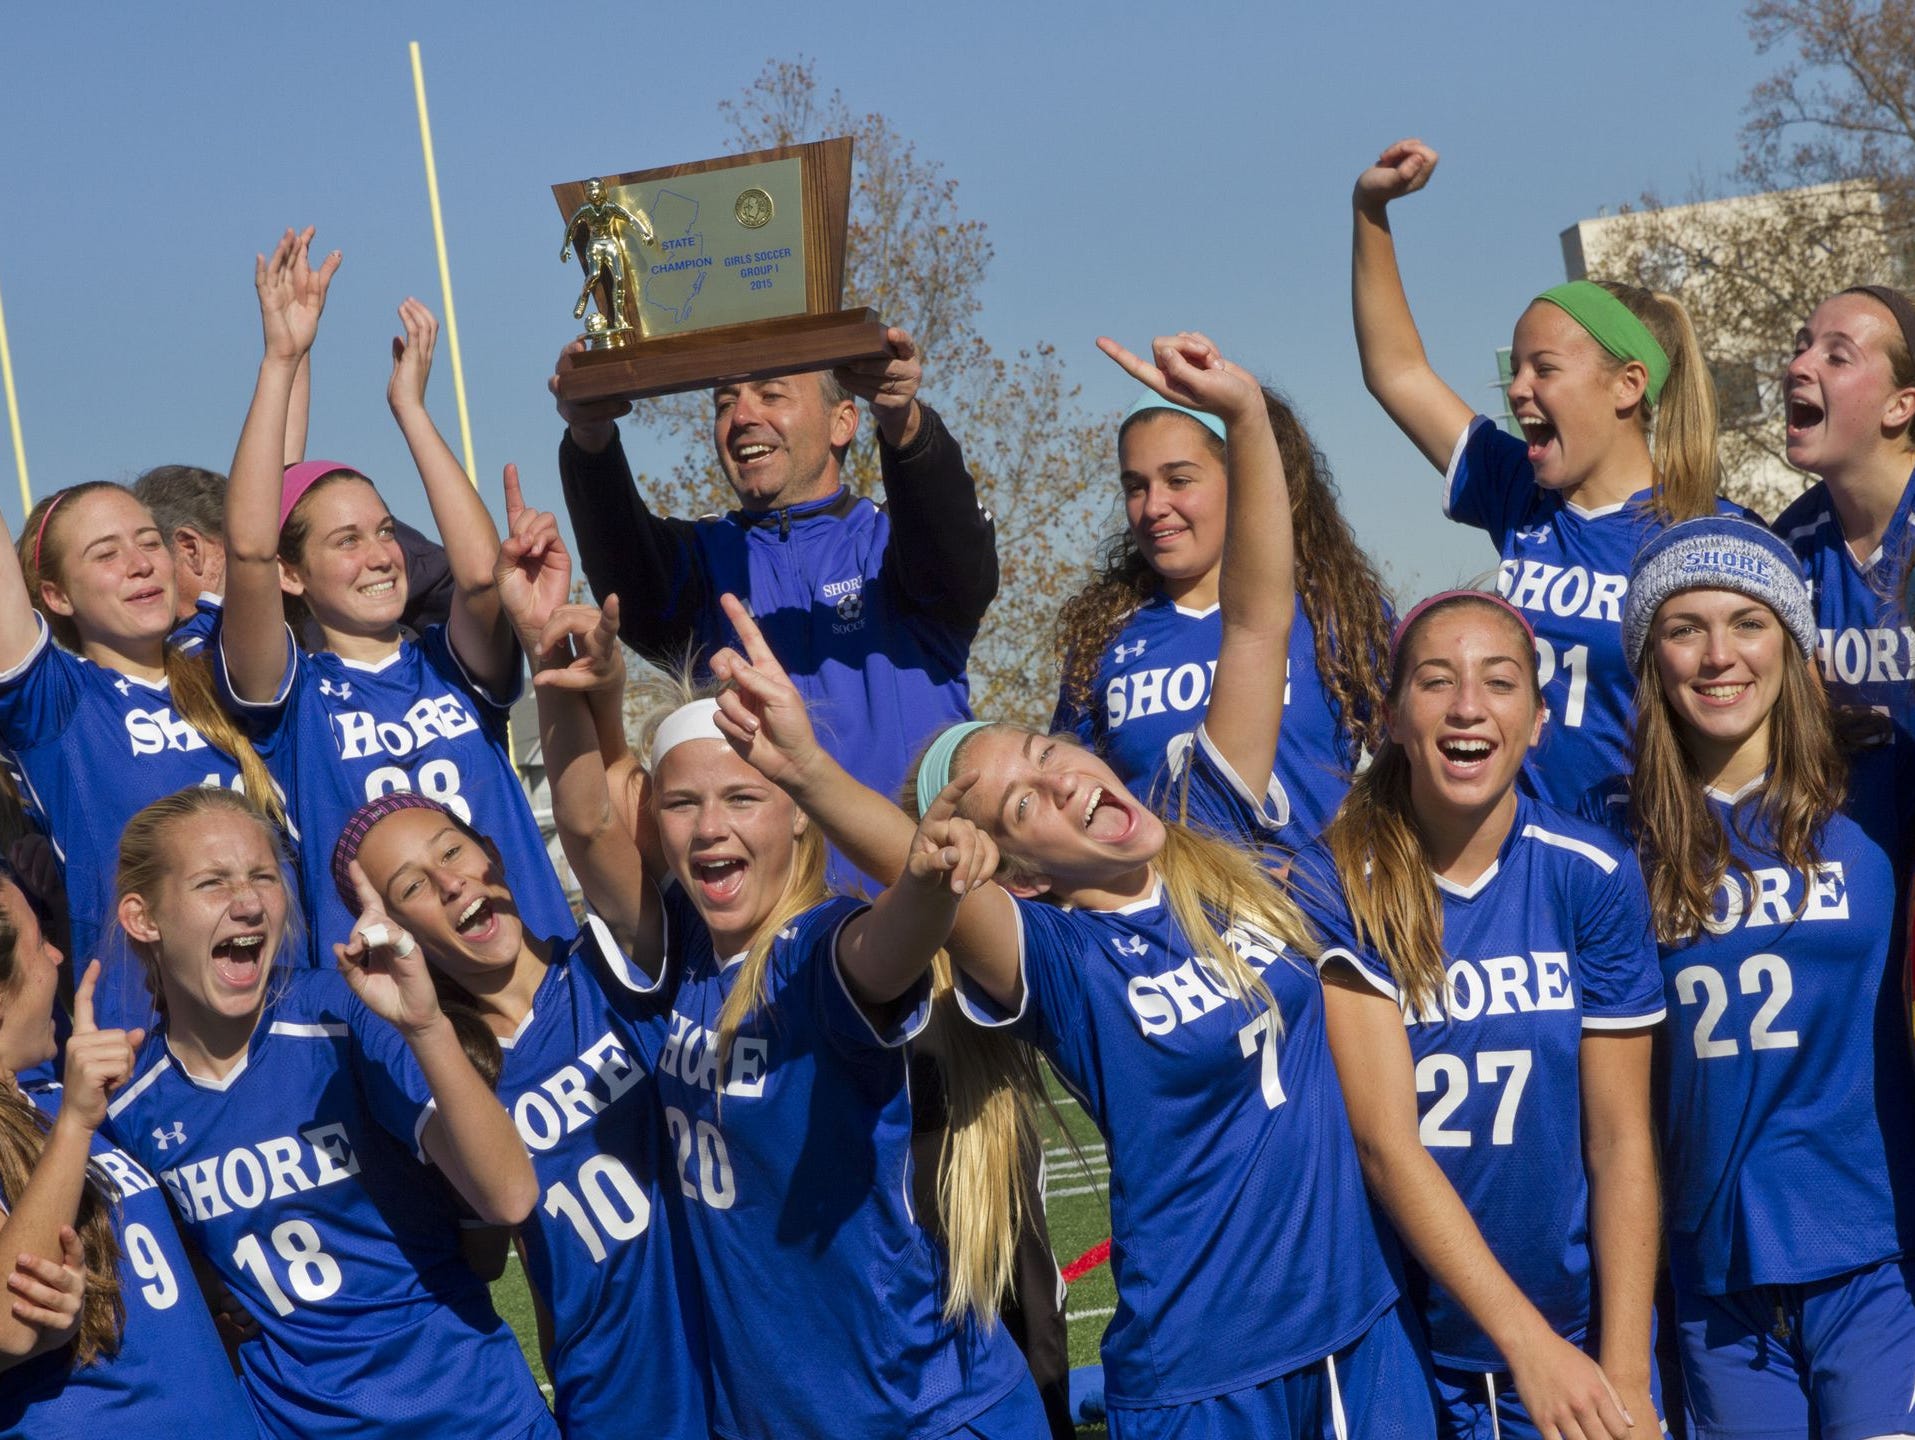 The 2015 Shore Regional girls soccer team celebrates winning the Group 1 state title on Nov. 21, 2015 at Kean University